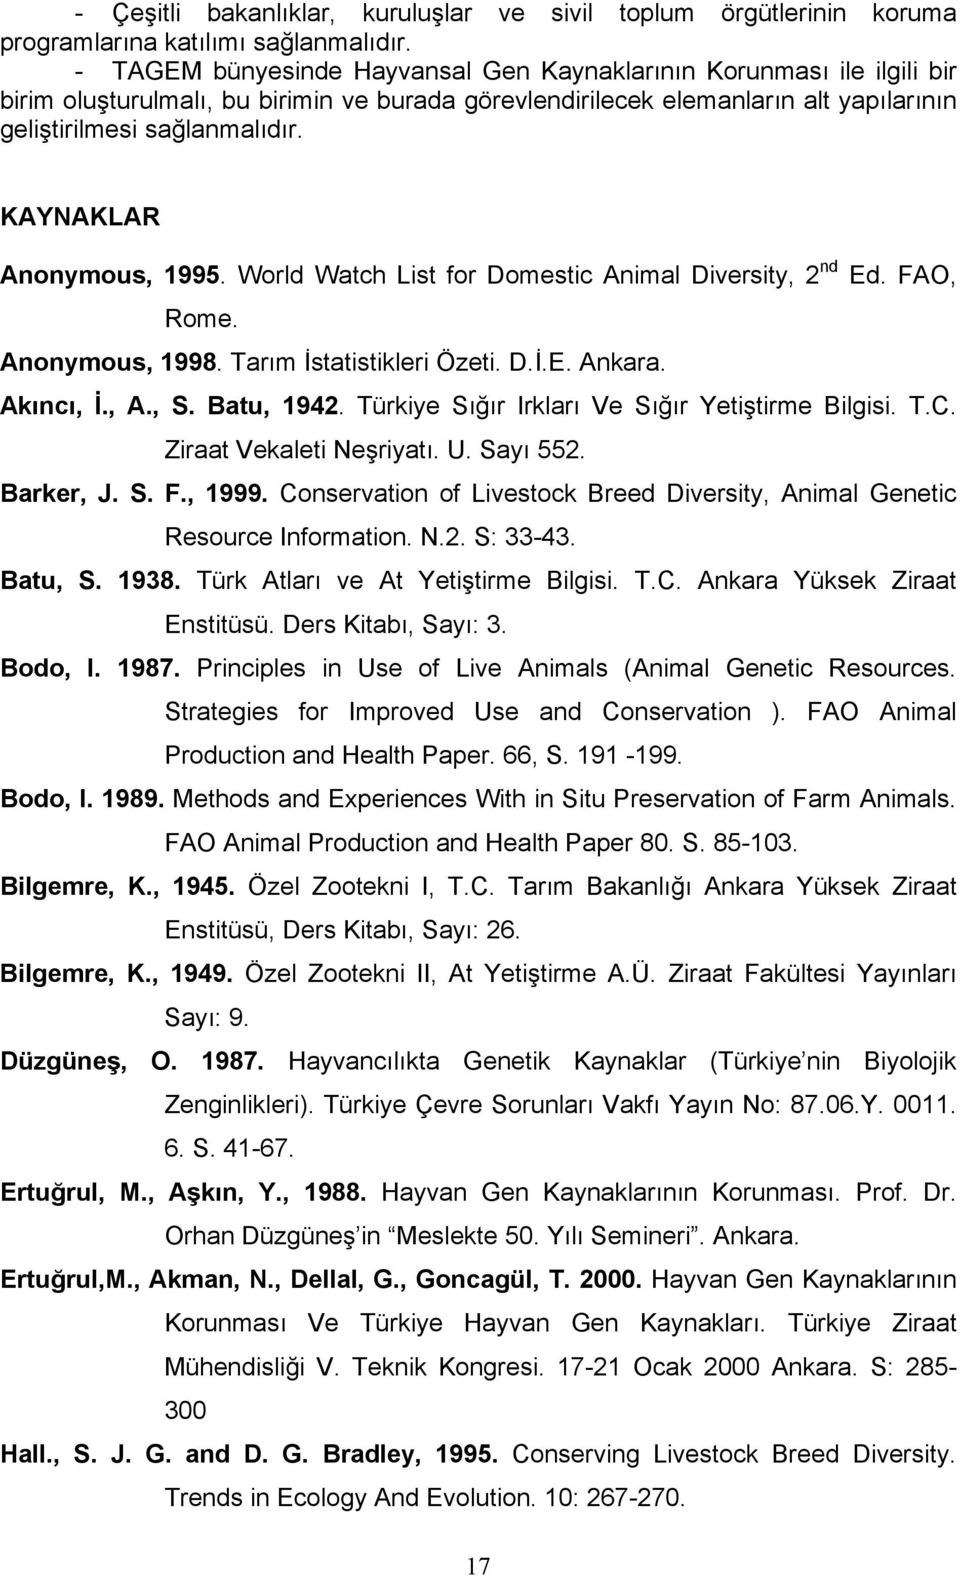 KAYNAKLAR Anonymous, 1995. World Watch List for Domestic Animal Diversity, 2 nd Ed. FAO, Rome. Anonymous, 1998. Tarım İstatistikleri Özeti. D.İ.E. Ankara. Akıncı, İ., A., S. Batu, 1942.